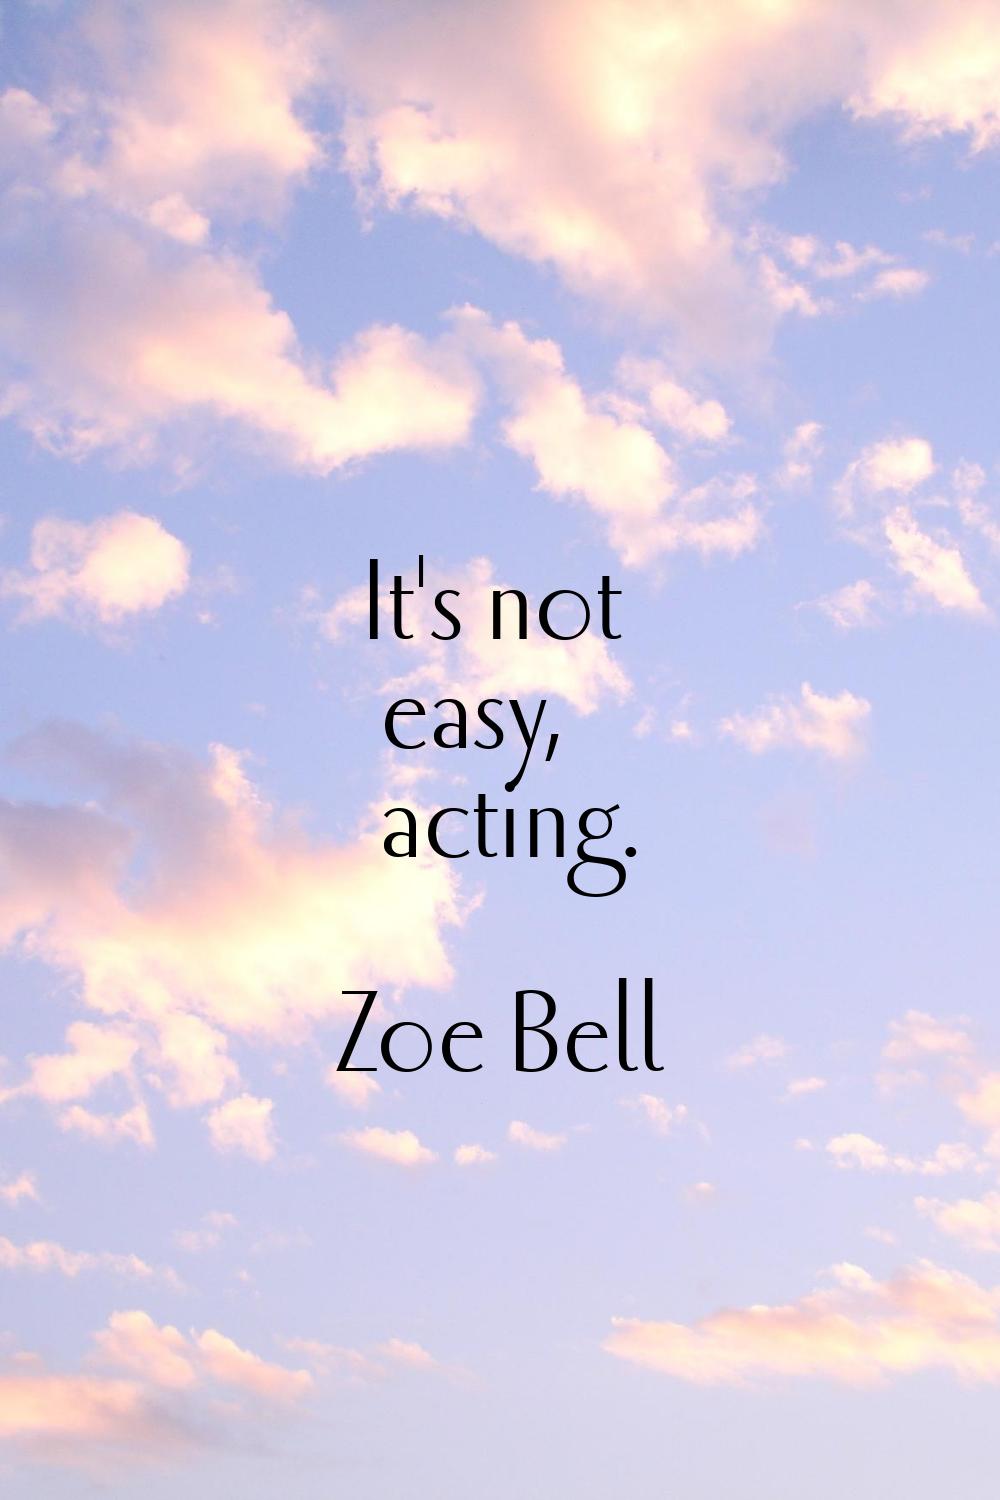 It's not easy, acting.